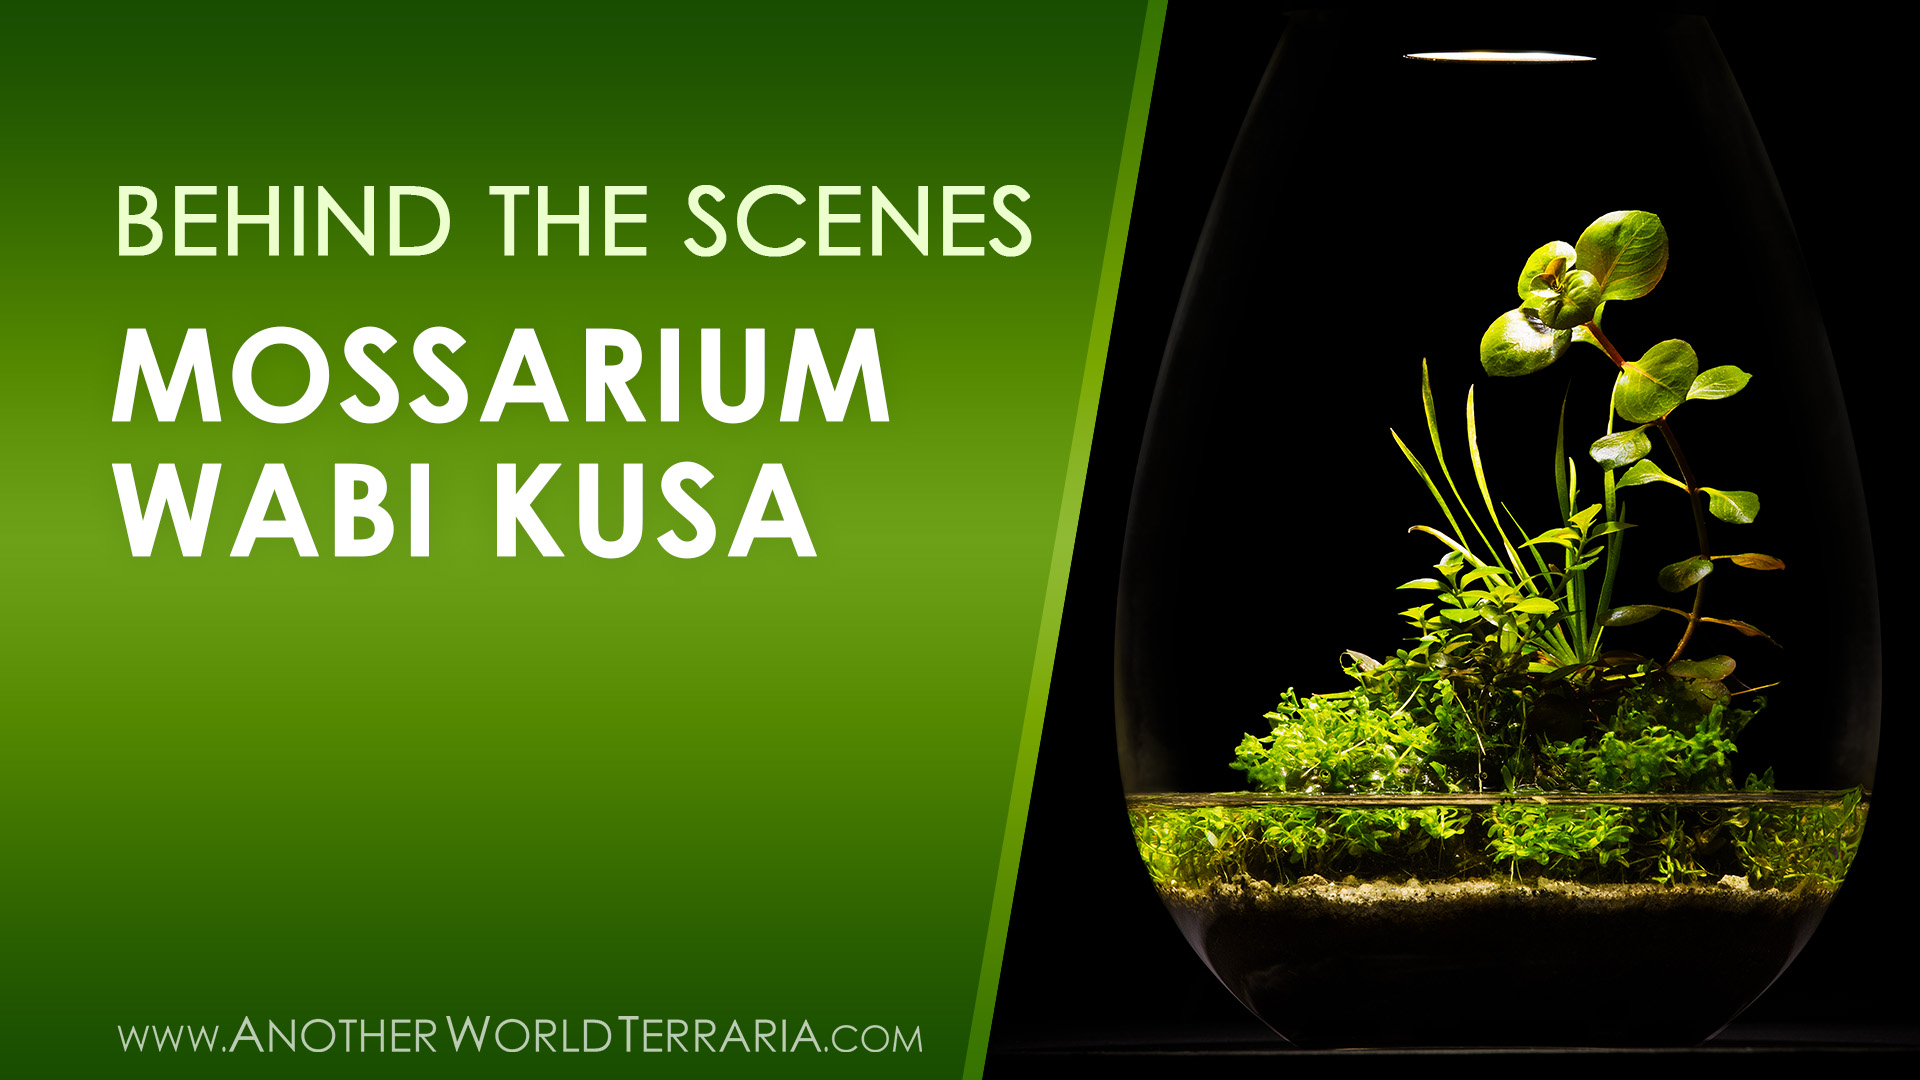 Behind the Scenes Build - Mossarium LED Wabi Kusa